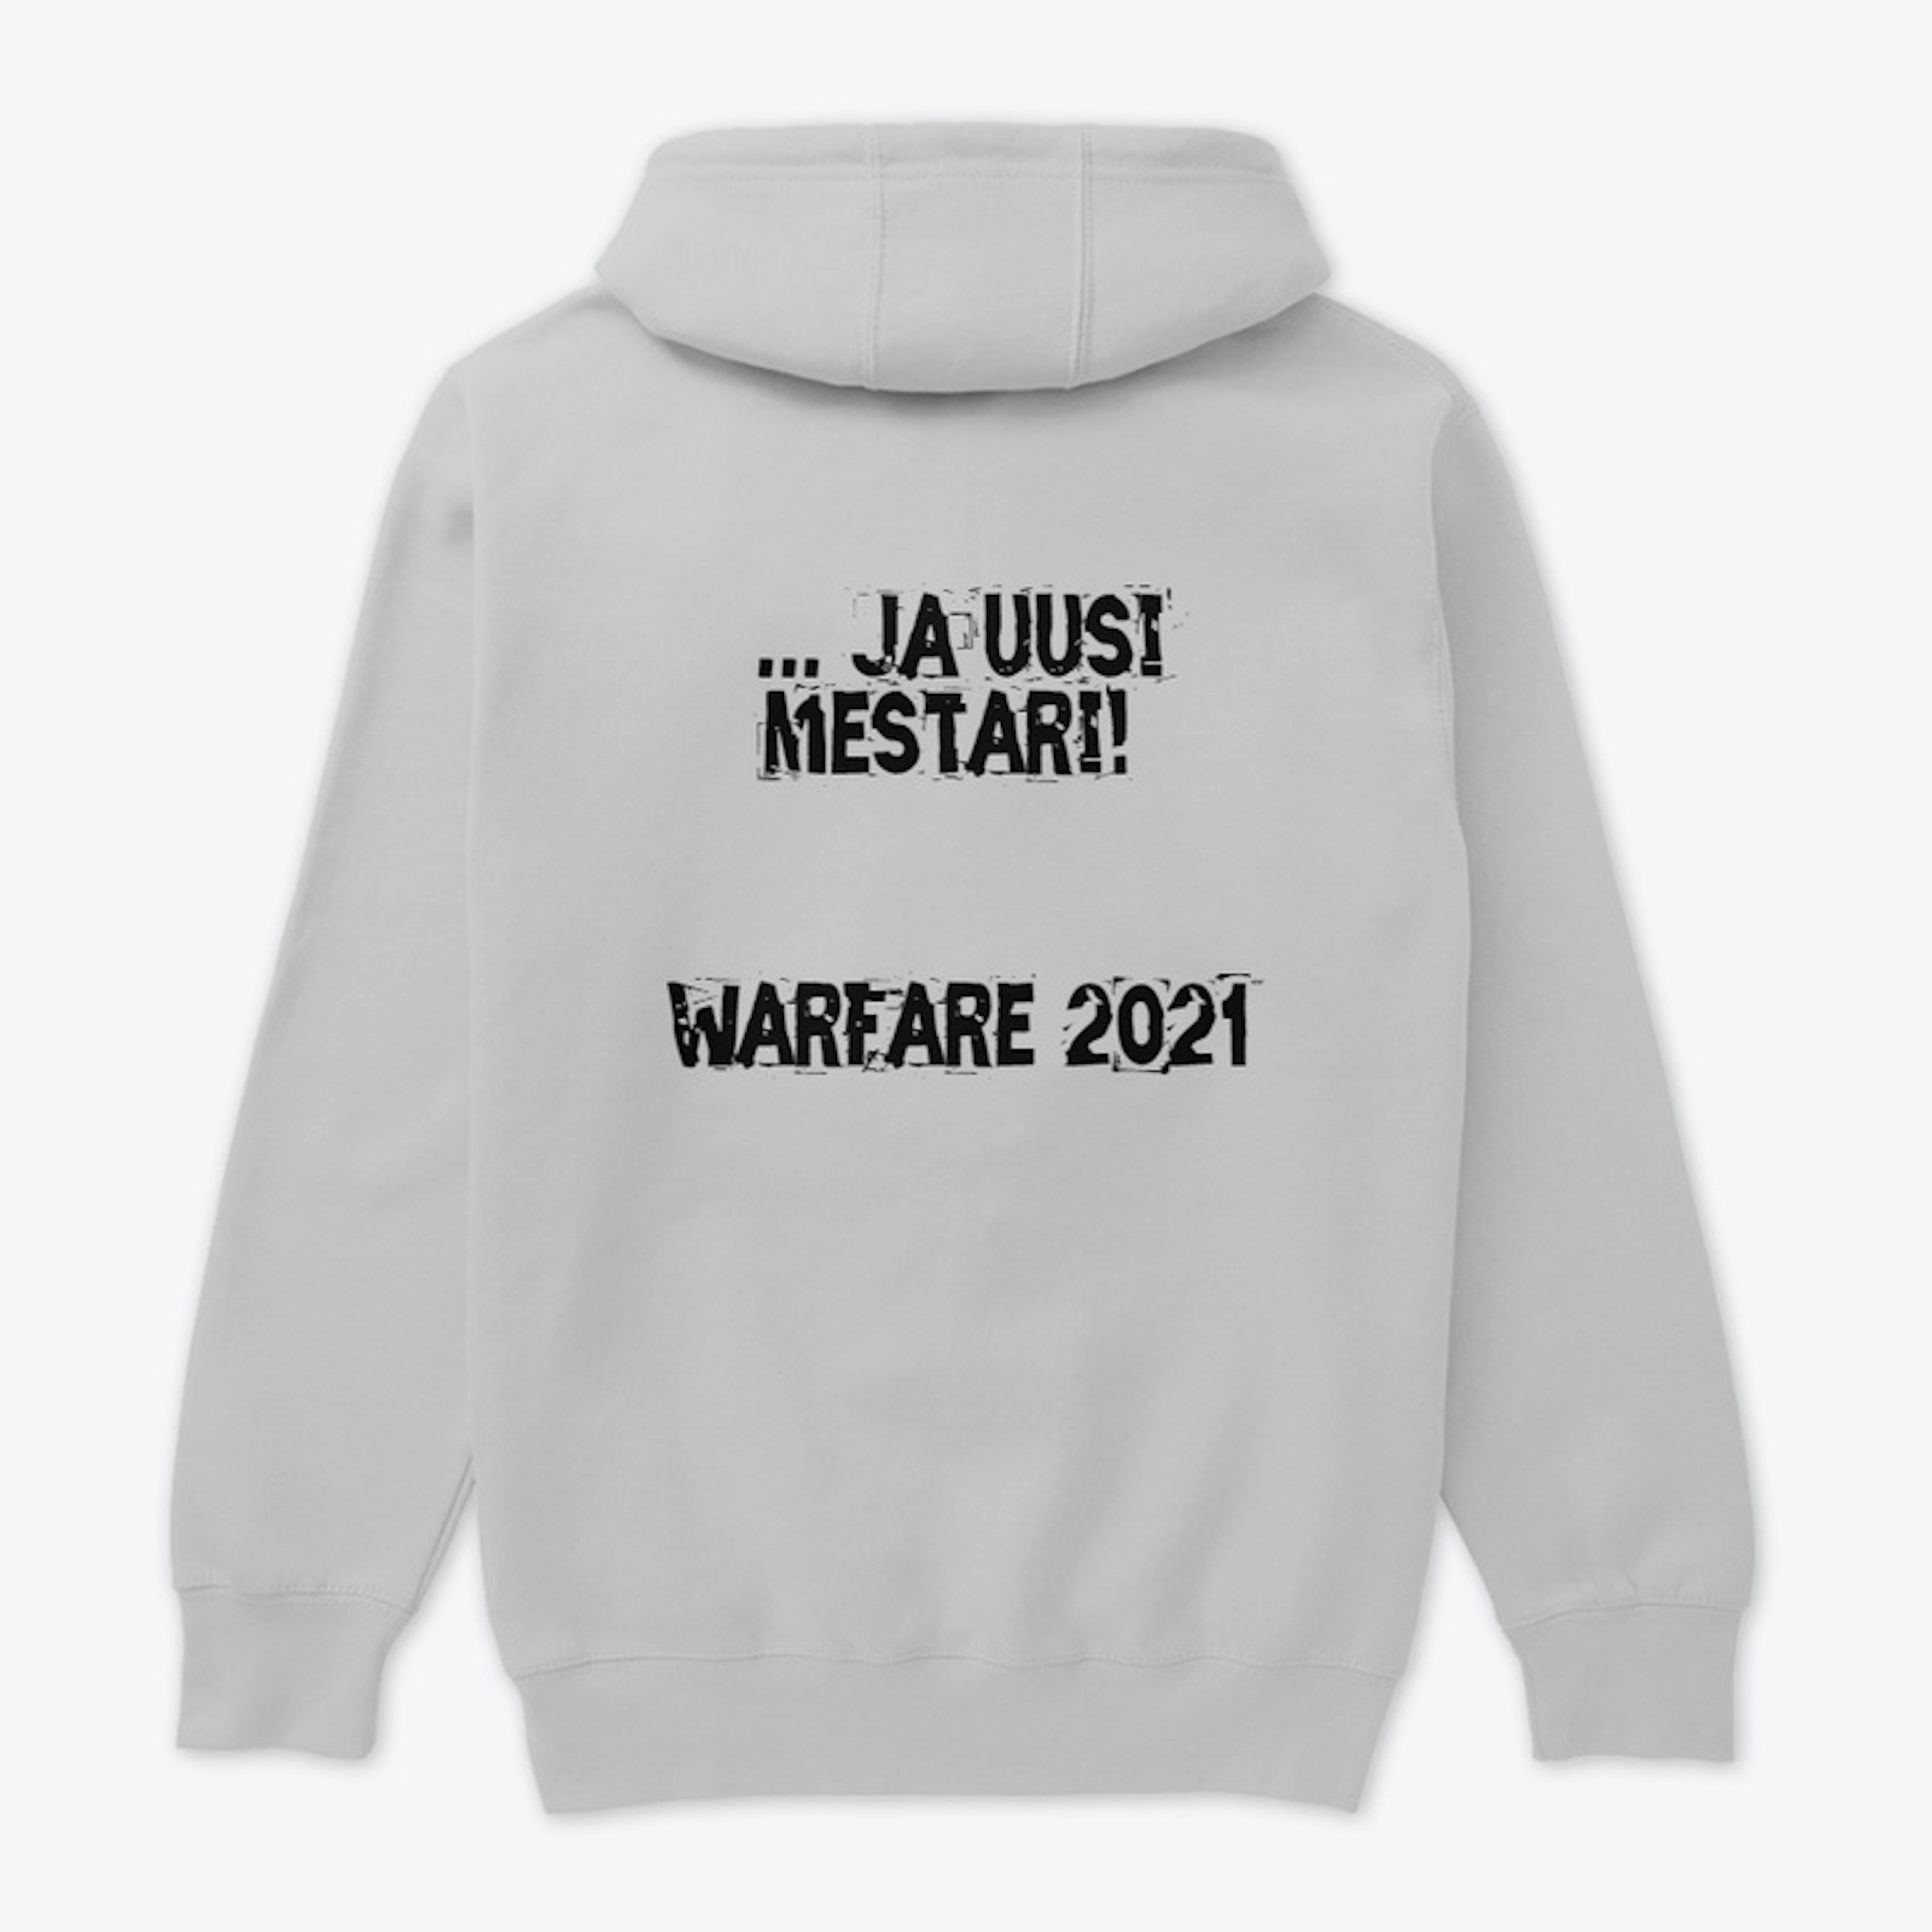 To the Finnish - Warfare 2021